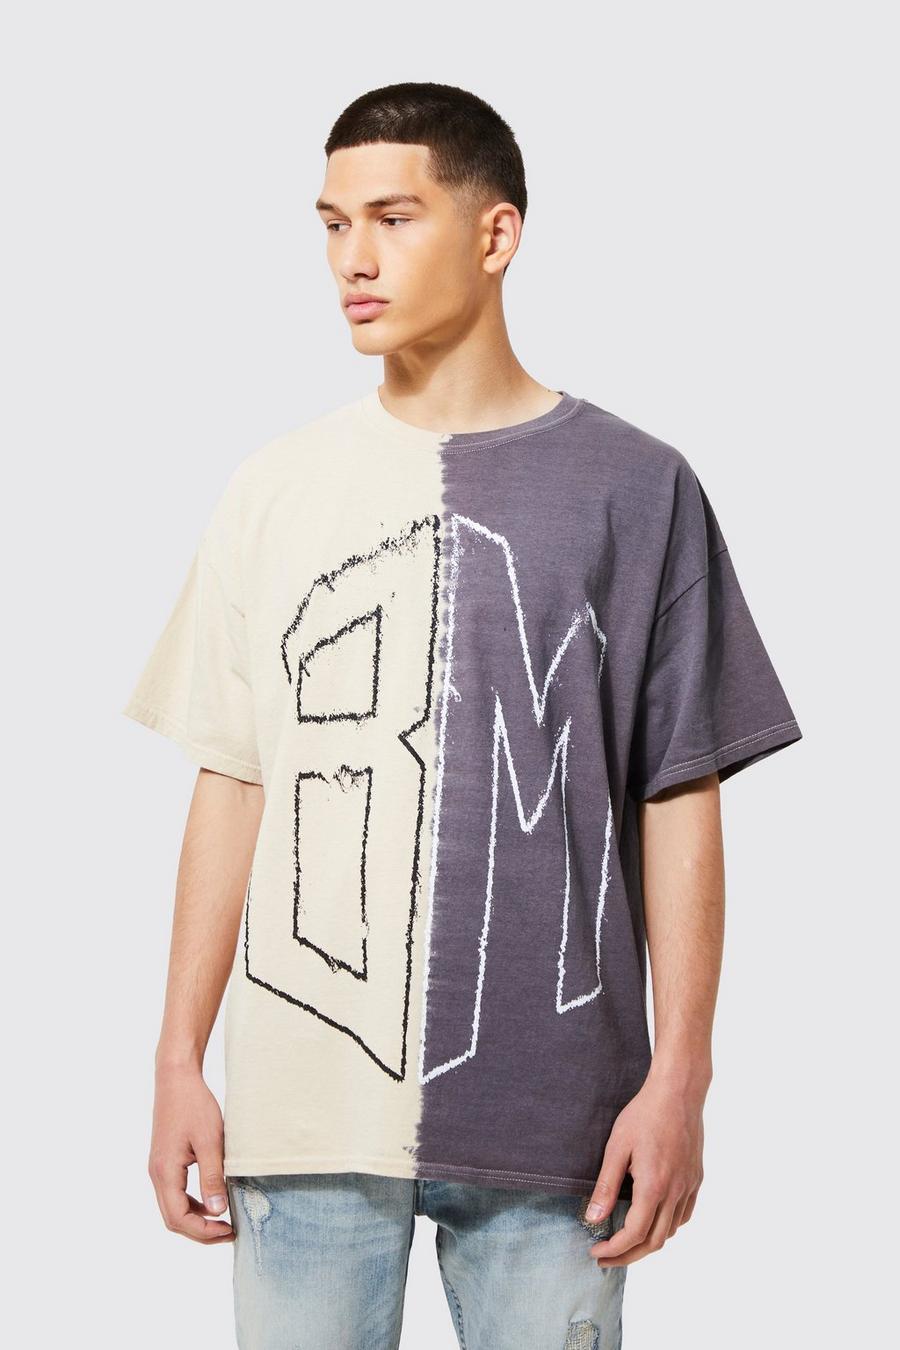 boohoo Men's Oversized Bleach Tie Dye Graphic T-Shirt